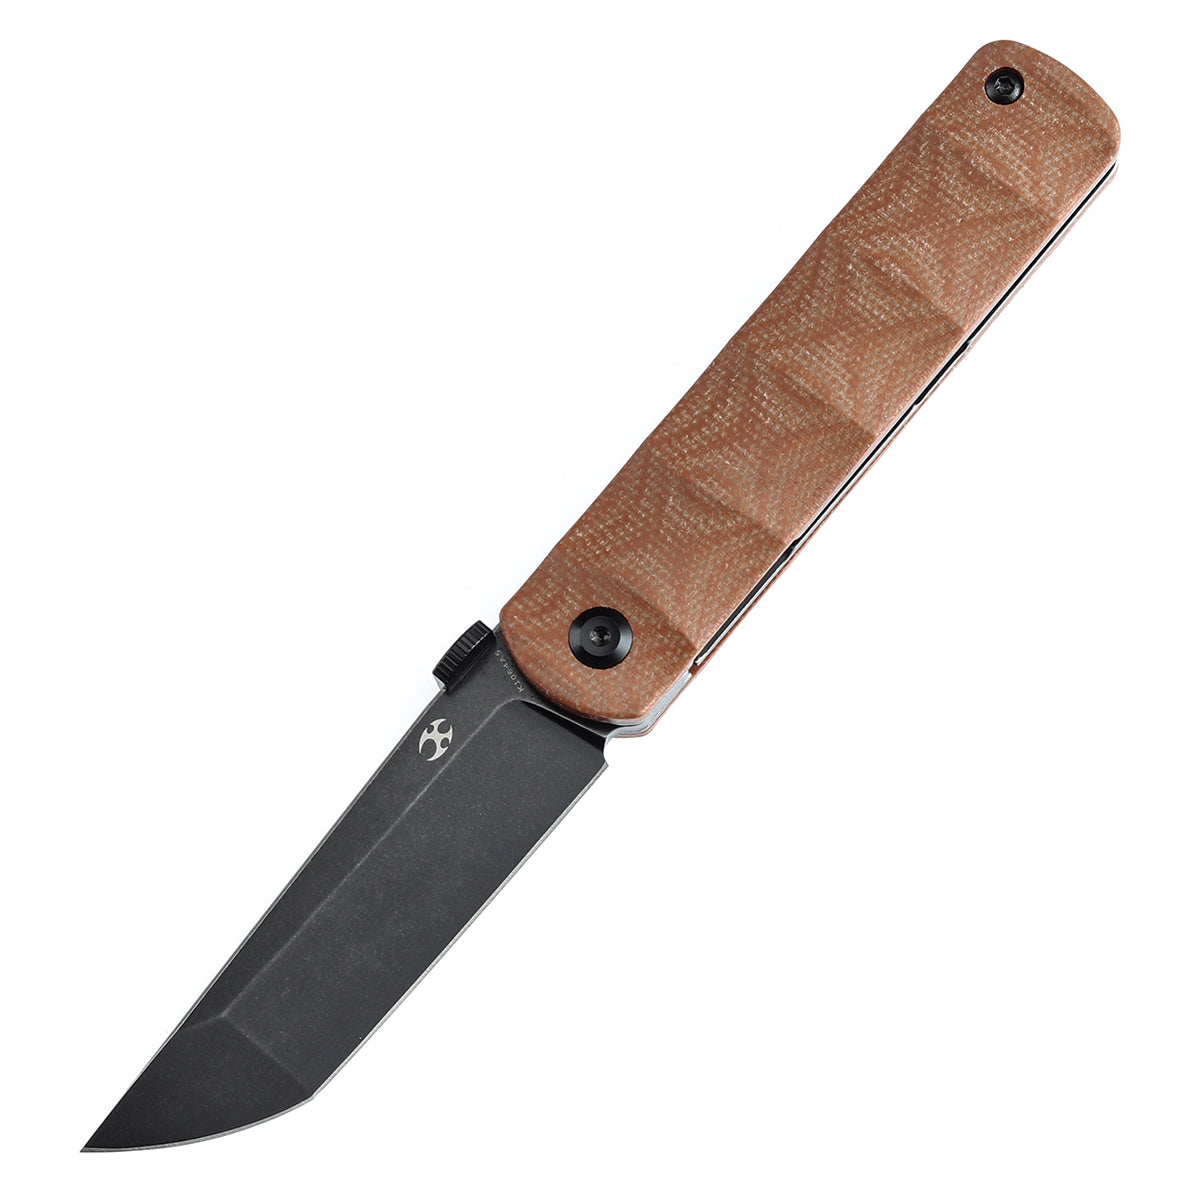 Kansept BTF K1064A5 CPM-S35VN Blade Brown Micarta Handle Edc Flipper Knife